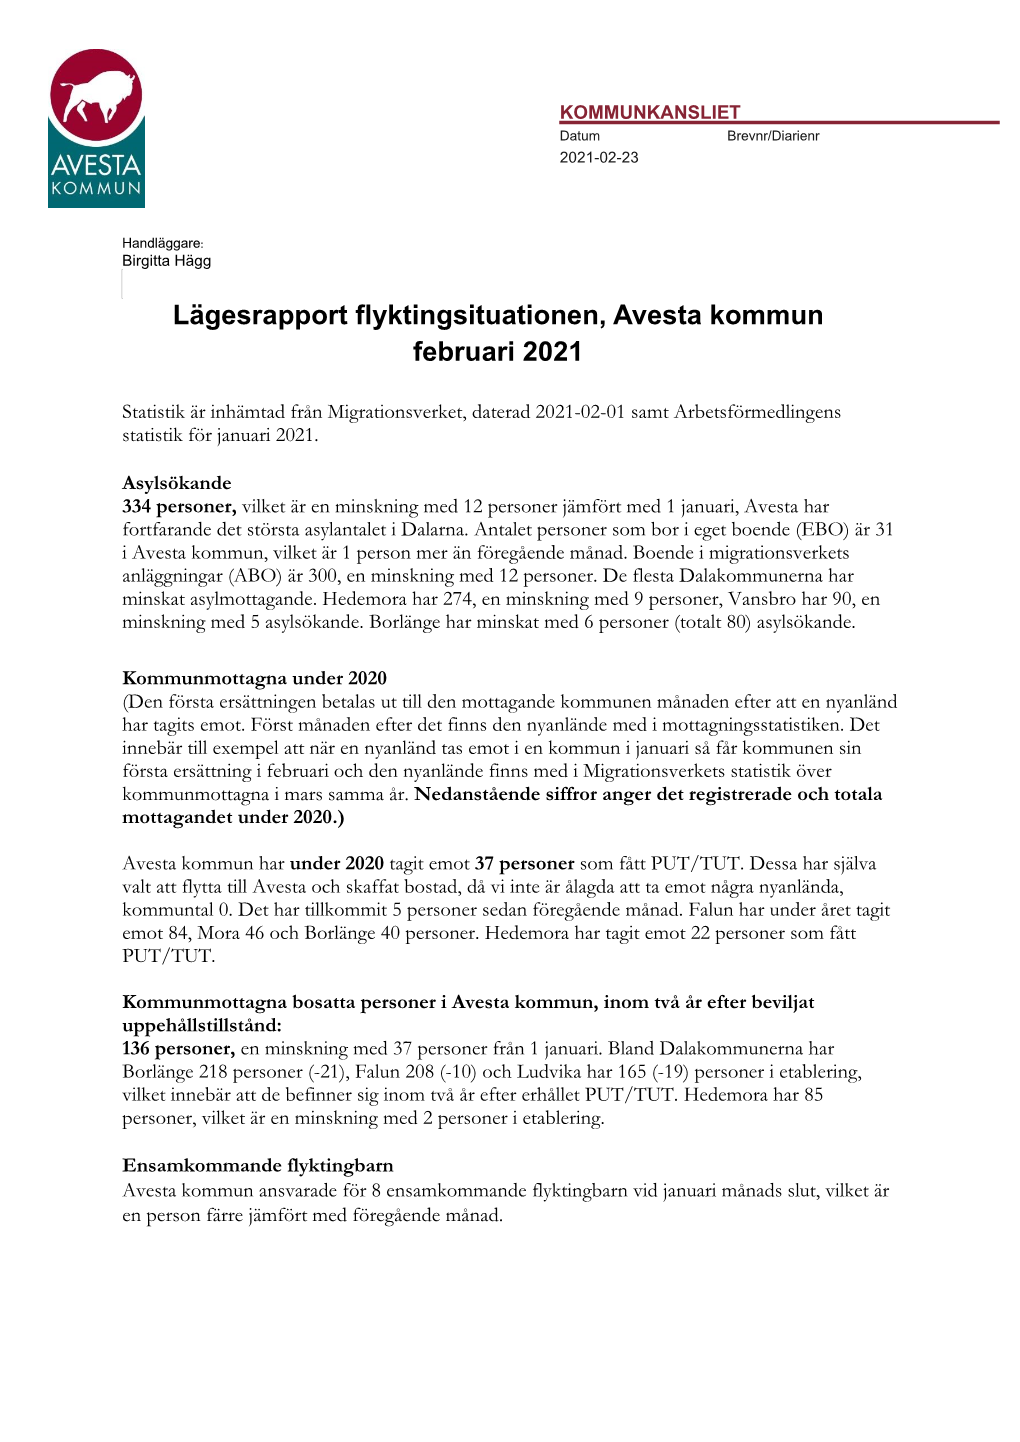 Lägesrapport Flyktingsituationen, Avesta Kommun Februari 2021